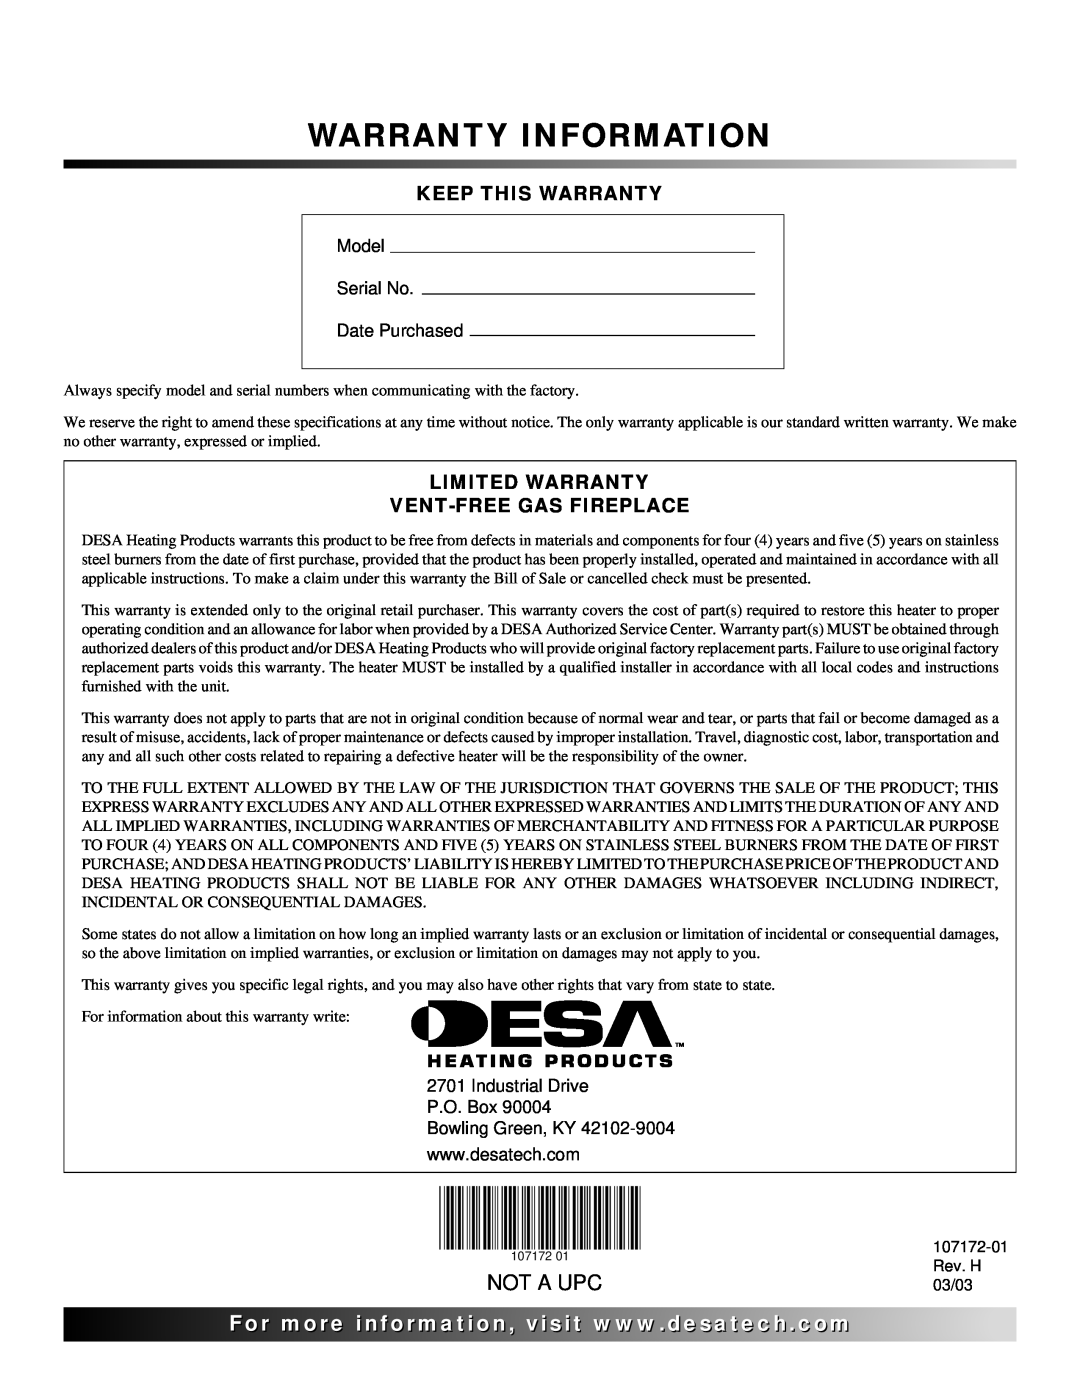 Desa VSGF33PRA Warranty Information, Not A Upc, Keep This Warranty, Limited Warranty Vent-Freegas Fireplace 